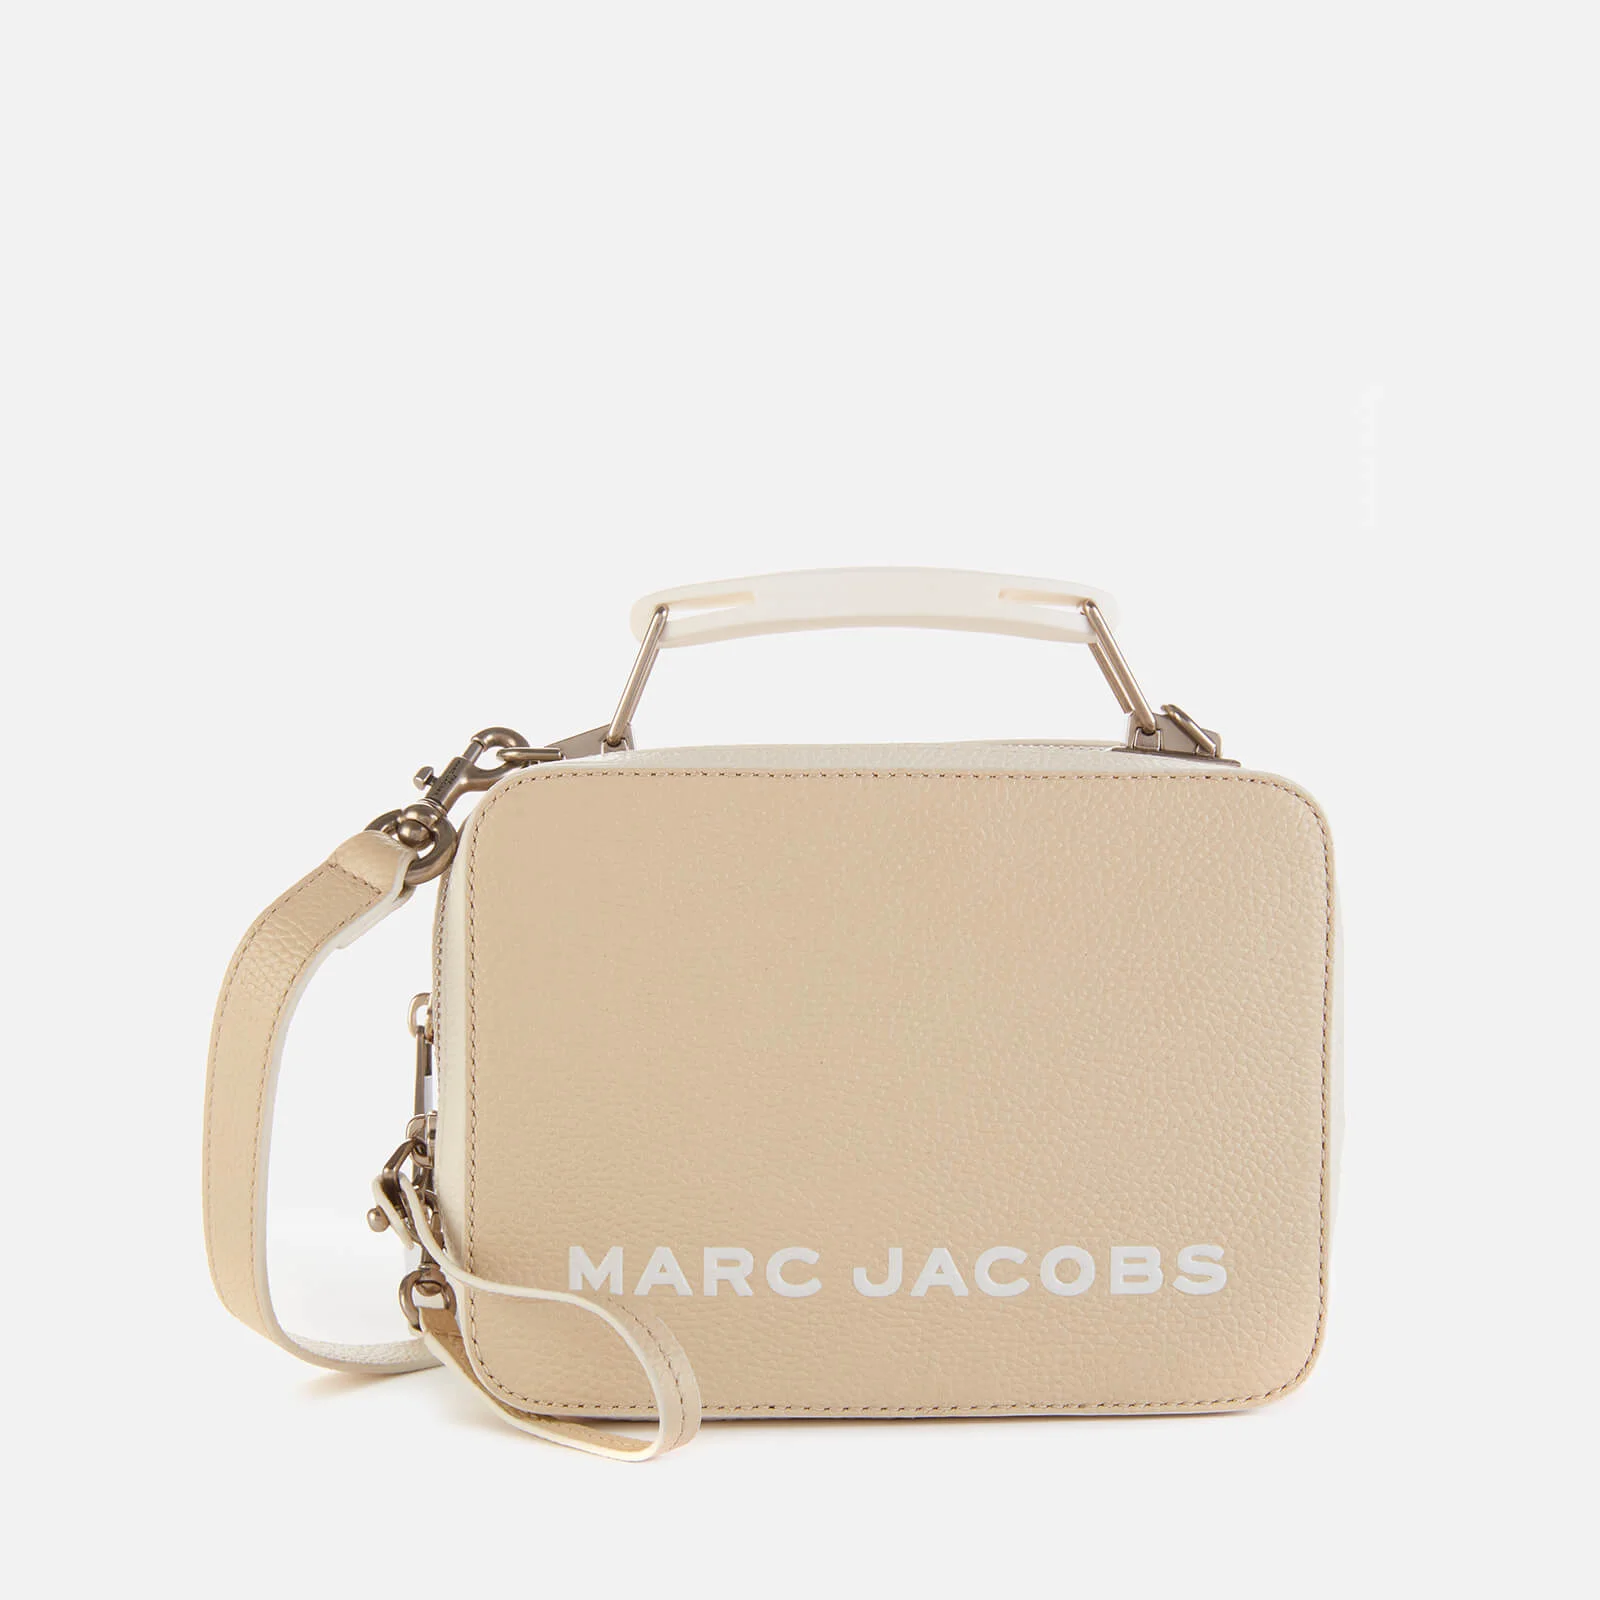 Marc Jacobs Women's The Box 20 Bag - Oatmilk Image 1